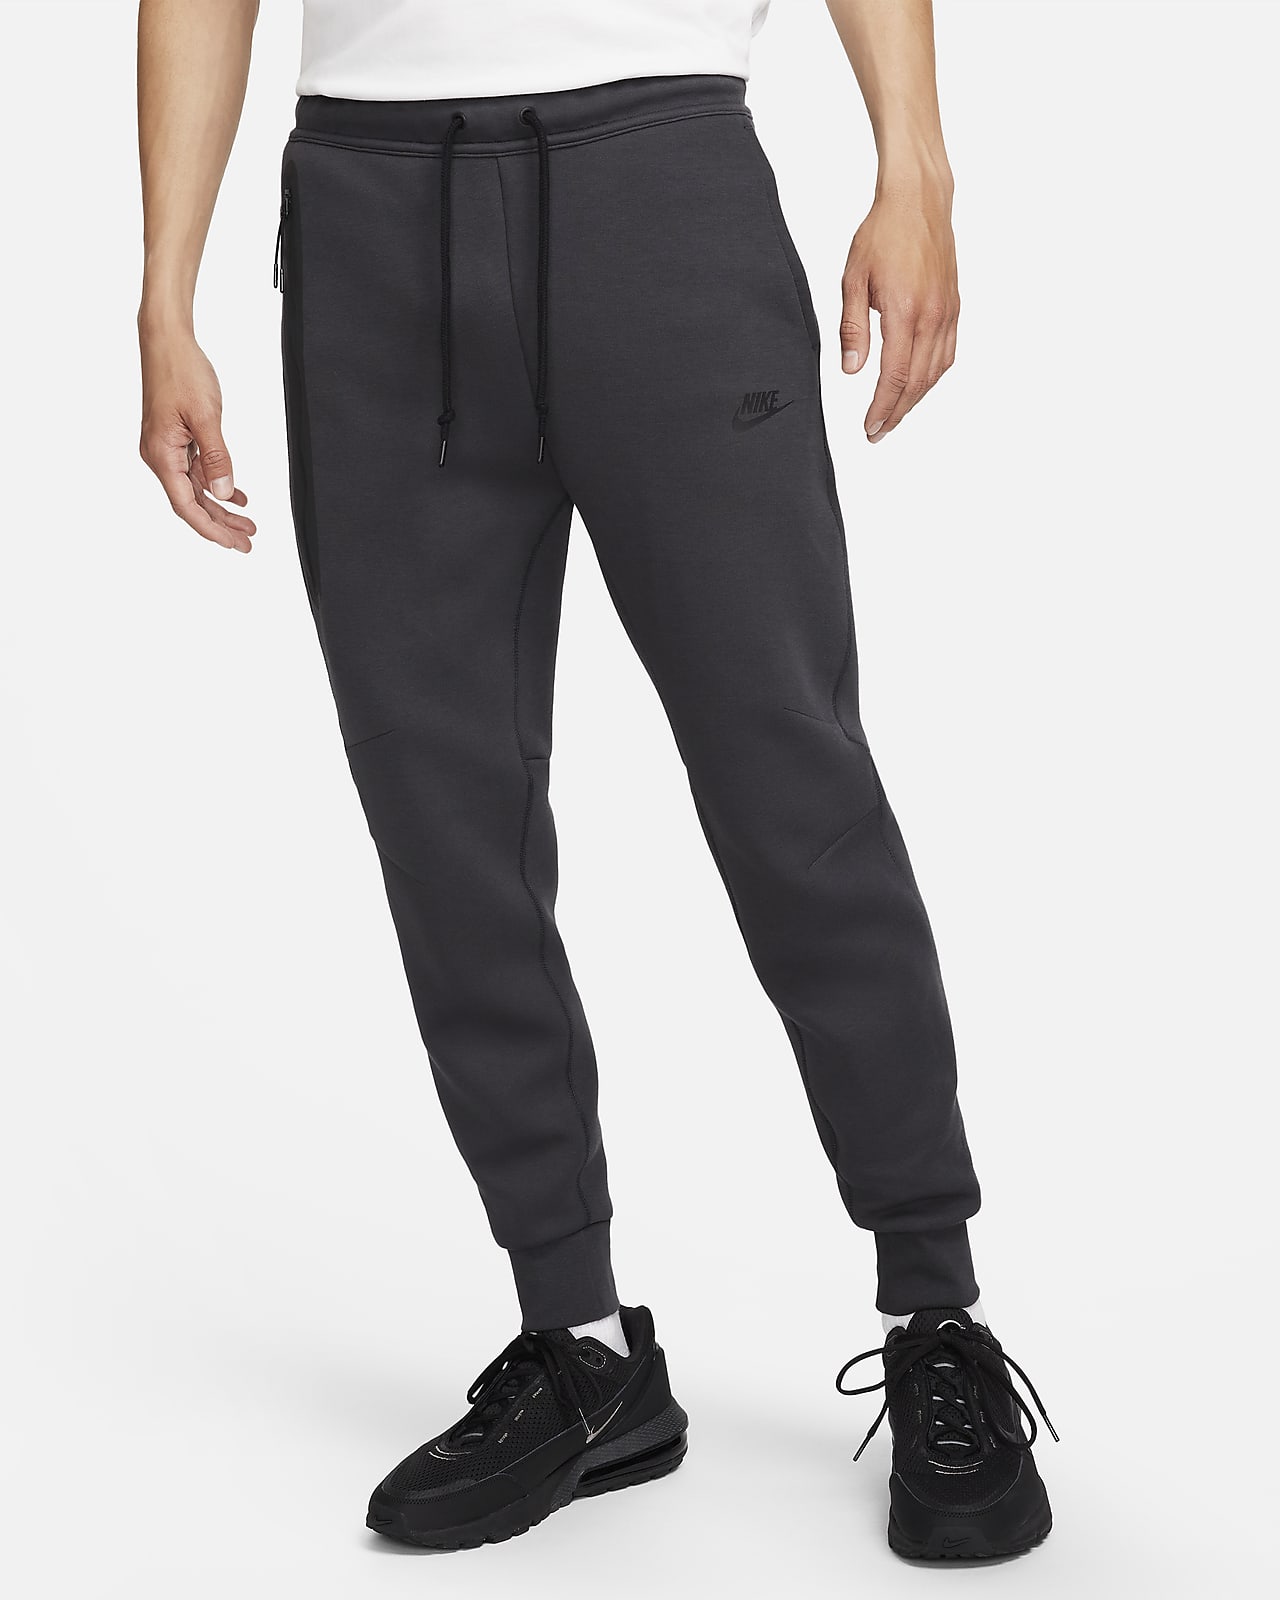 Nike Sportswear Tech Fleece 男款合身剪裁慢跑長褲